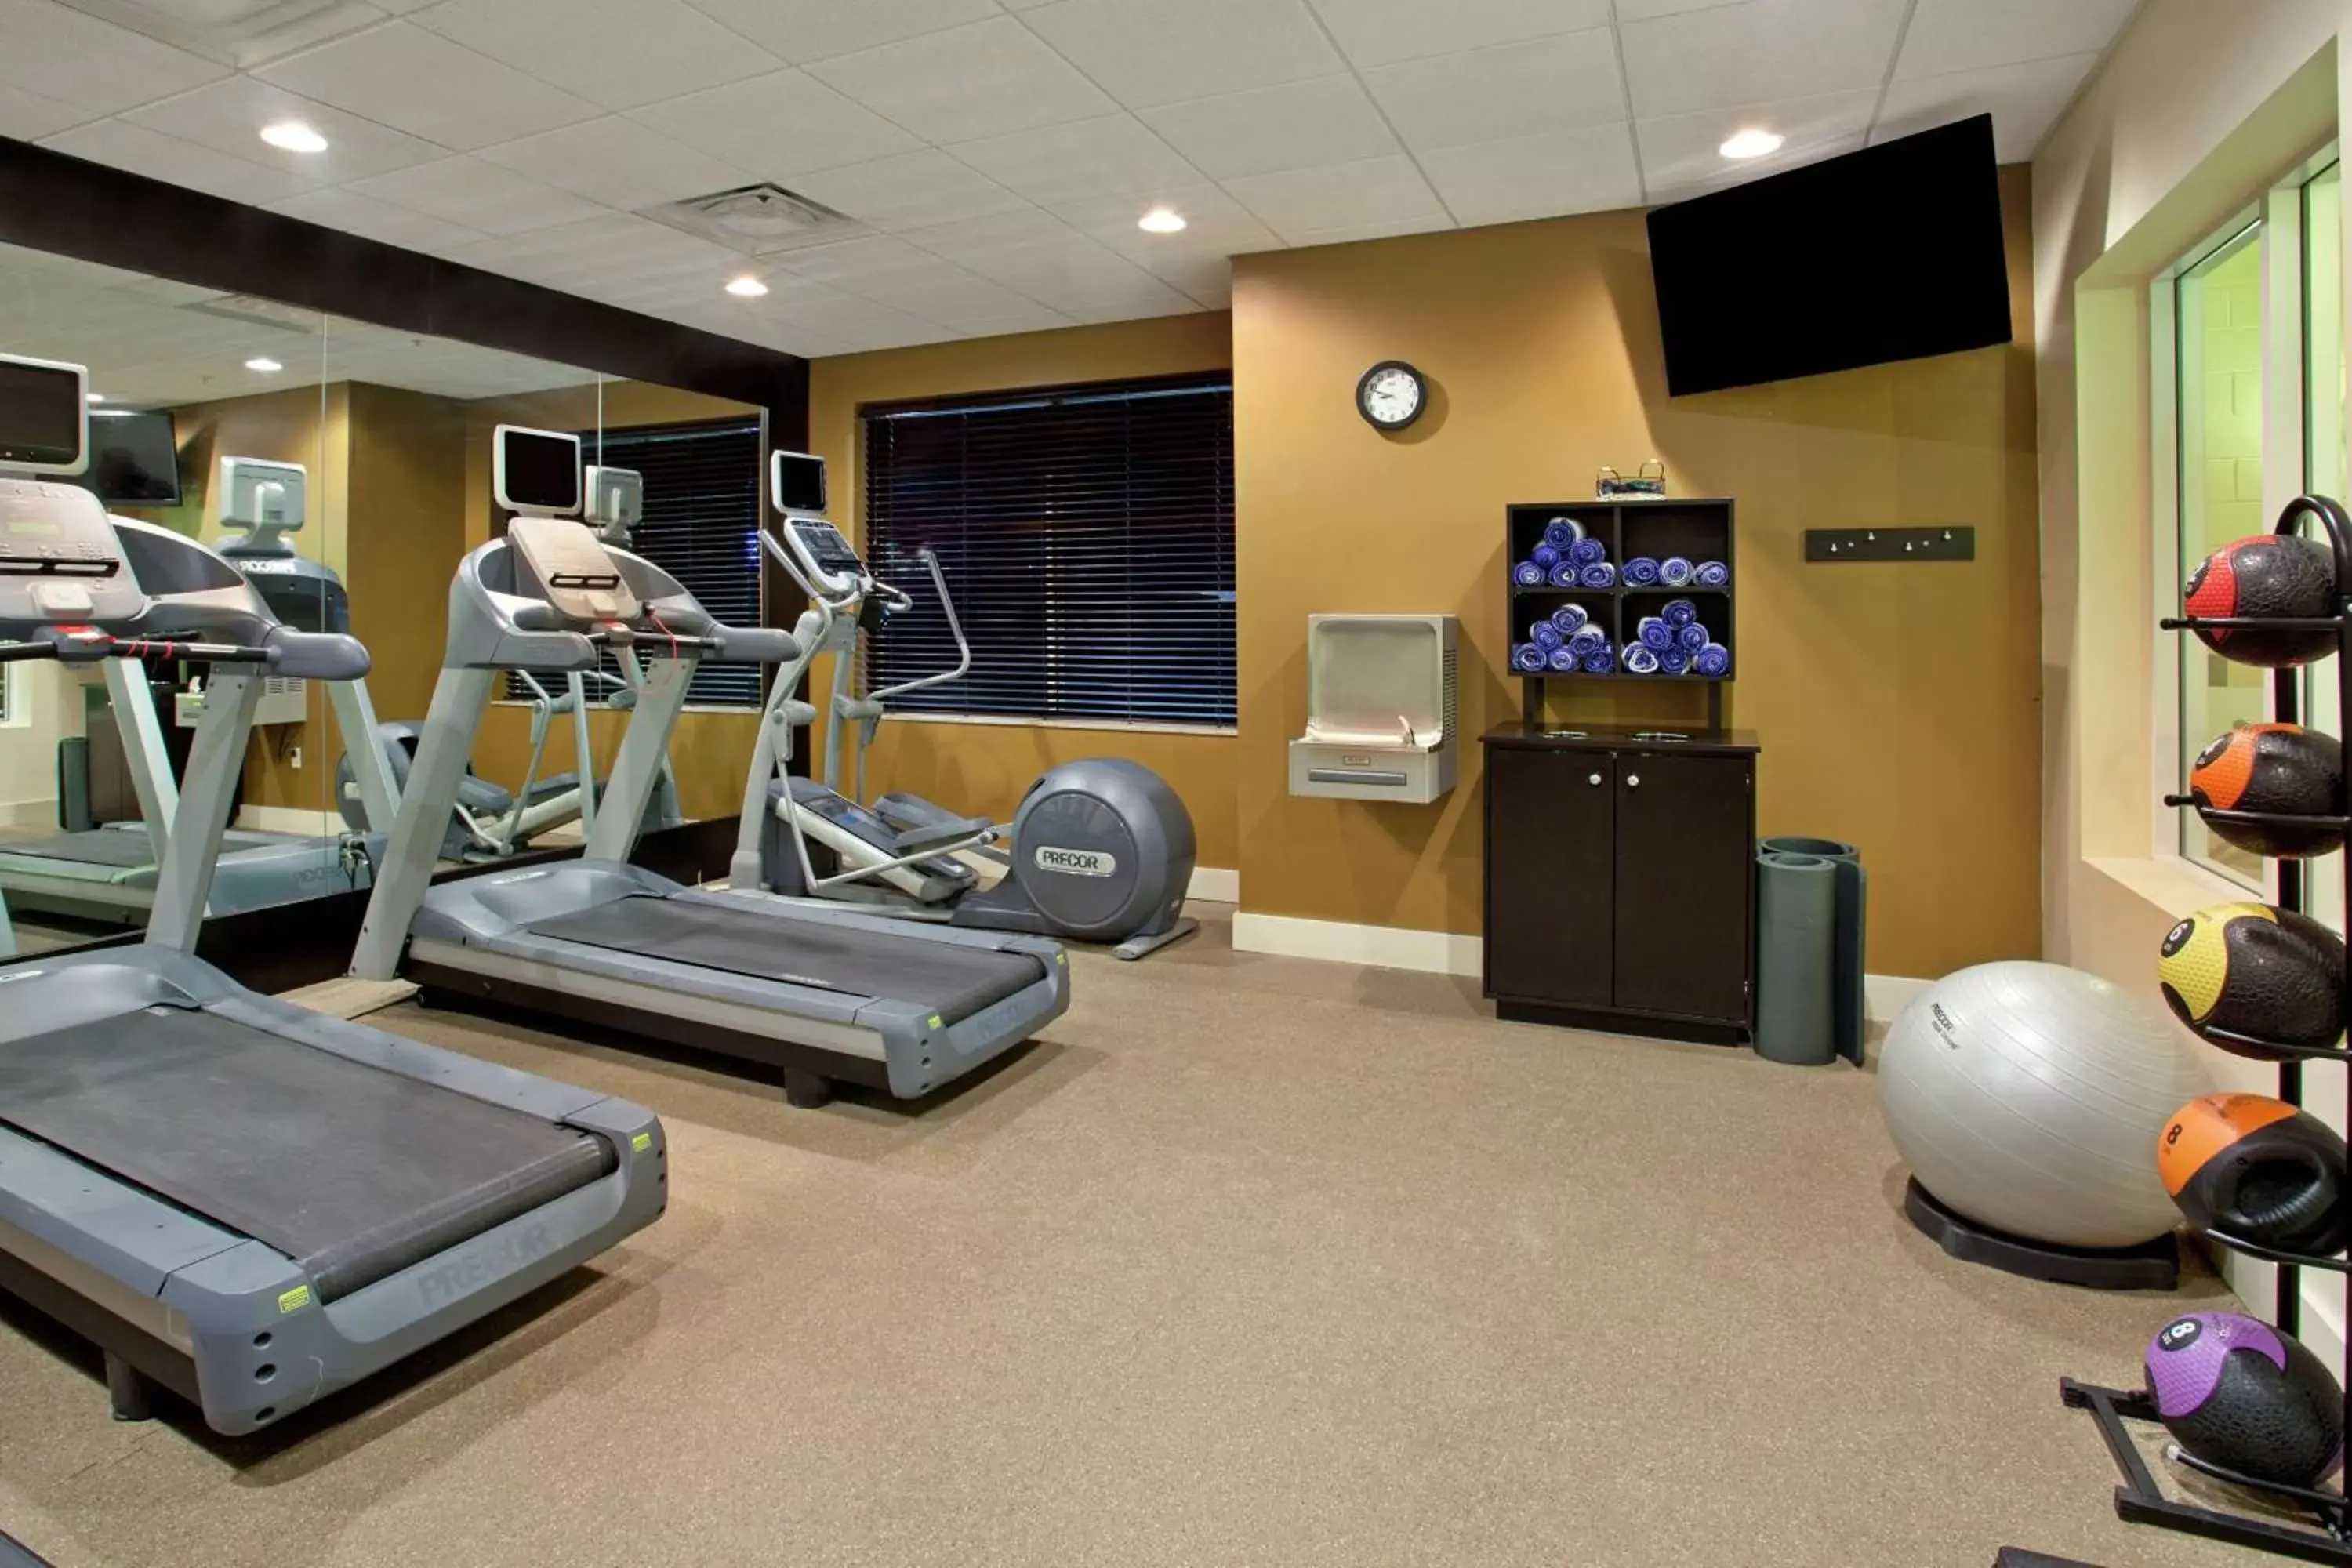 Fitness centre/facilities, Fitness Center/Facilities in Hilton Garden Inn Minneapolis/Eden Prairie